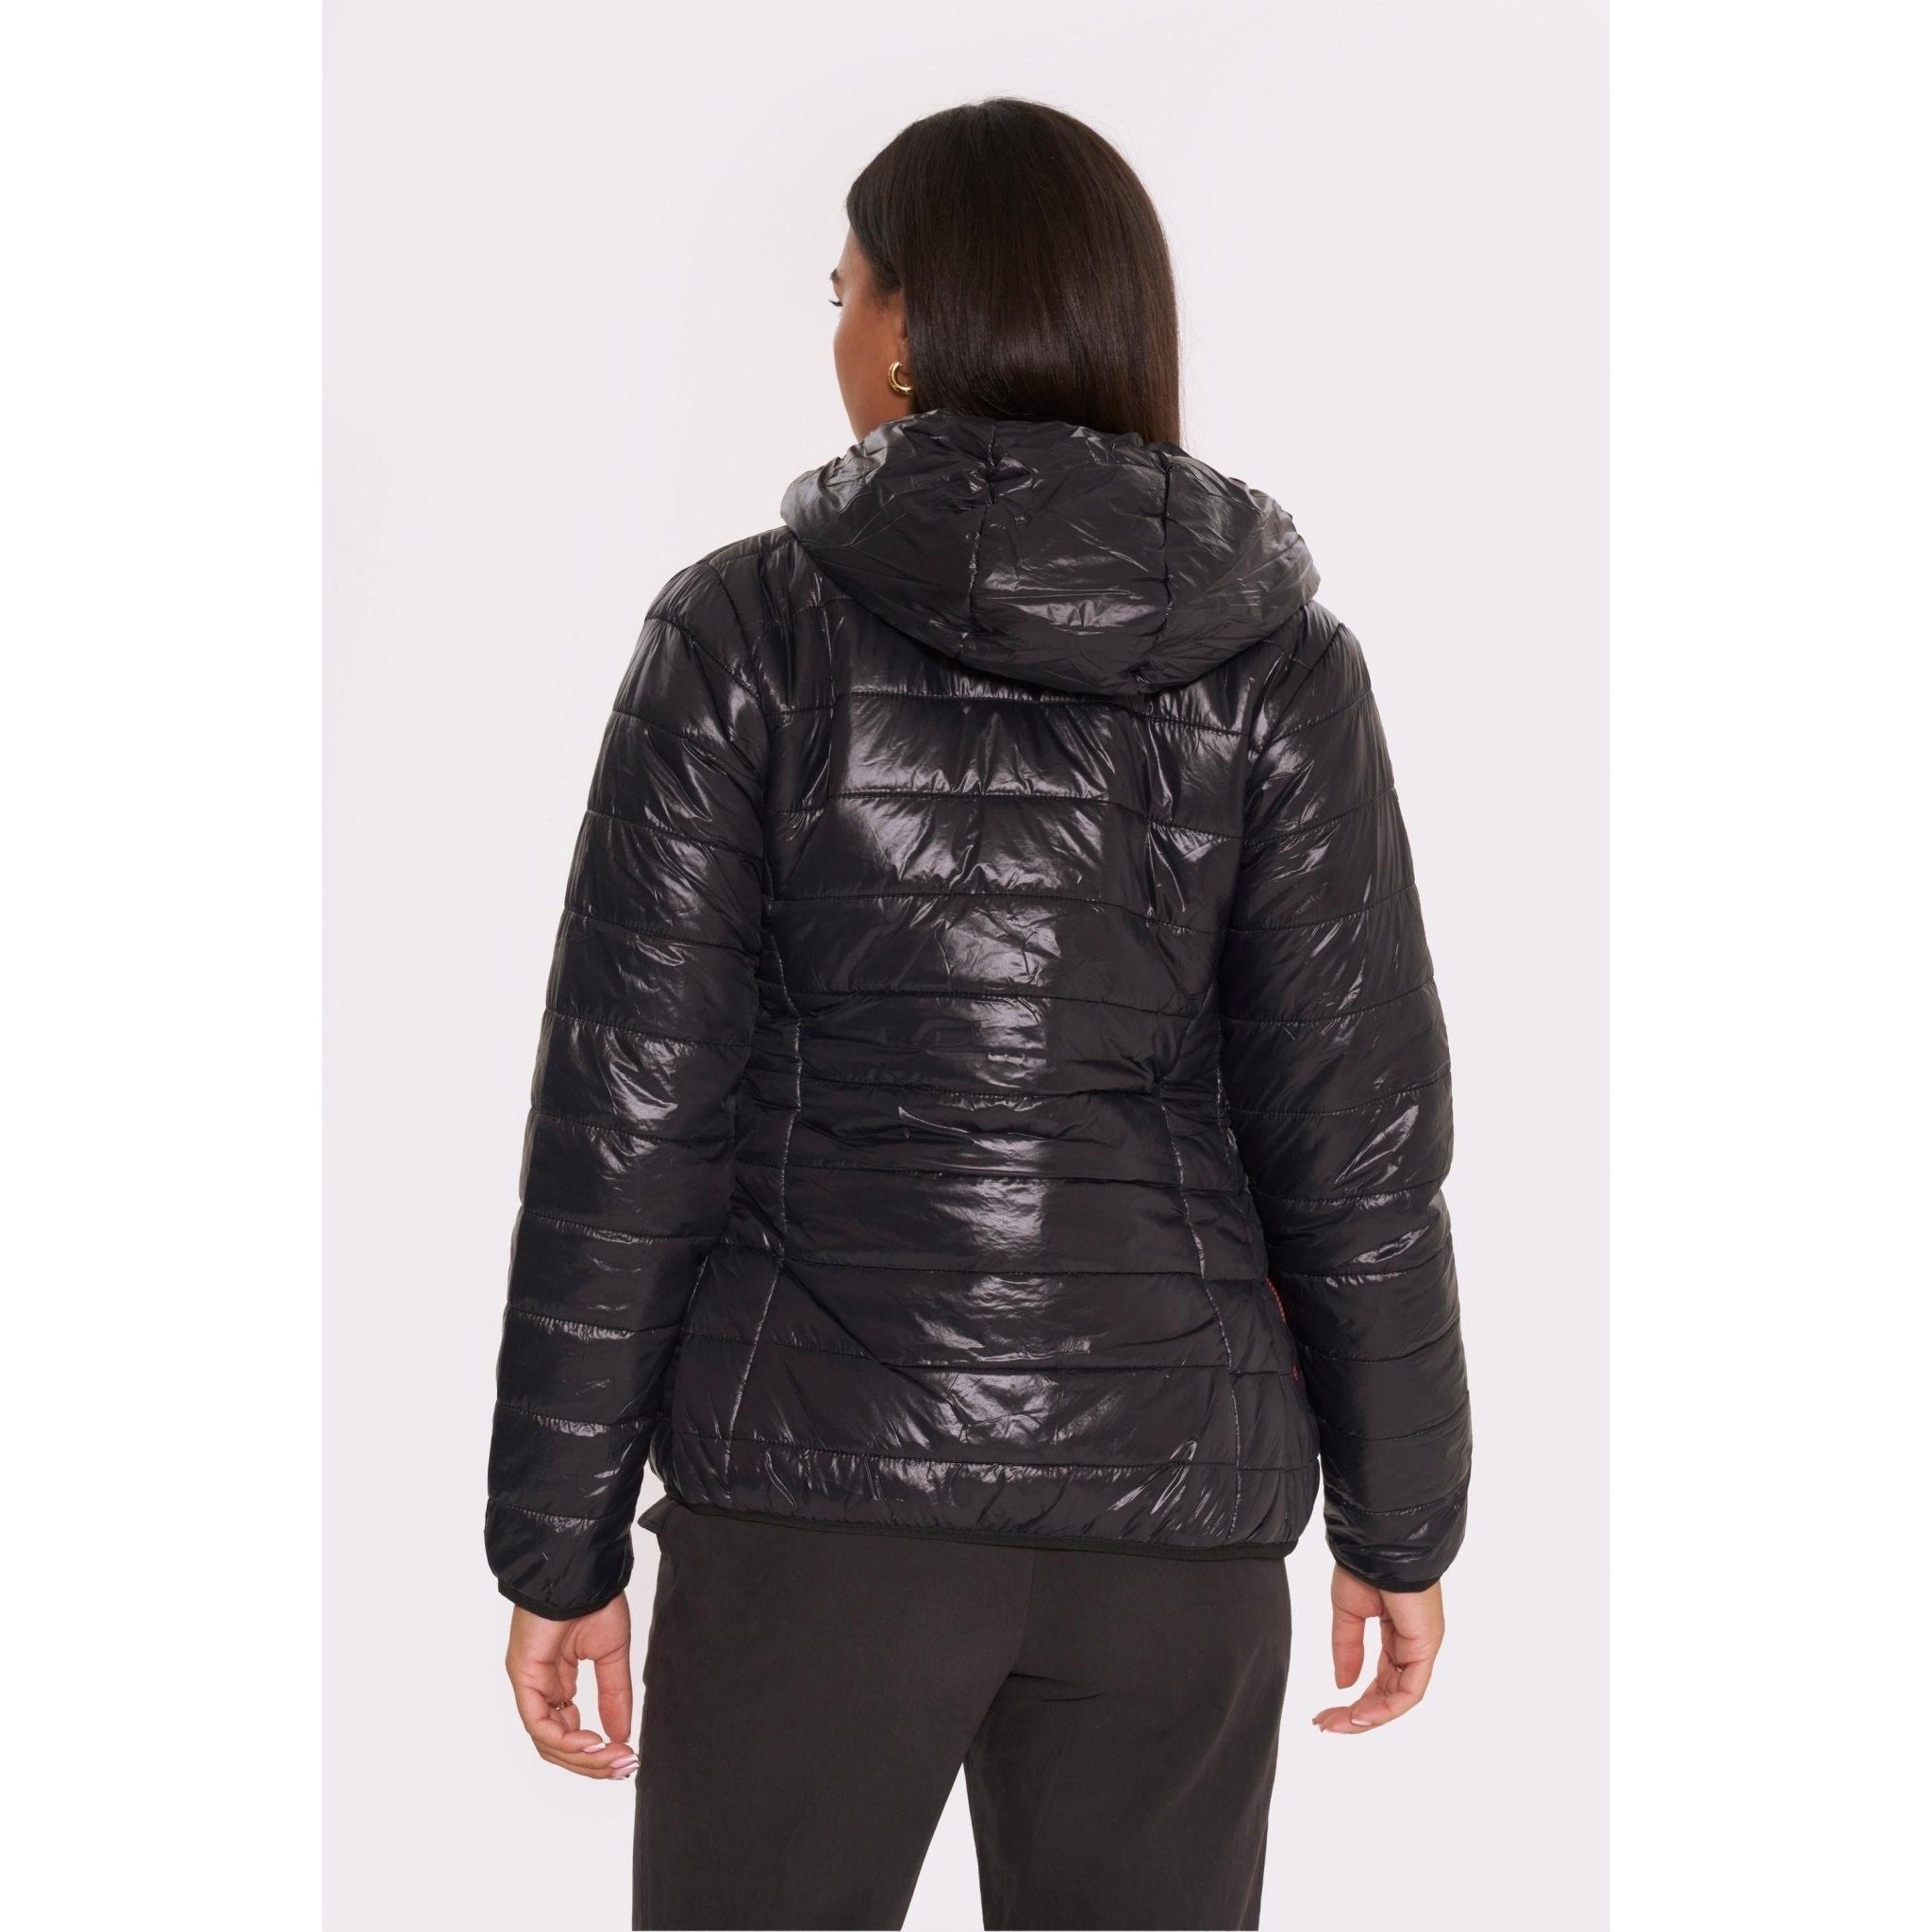 Womens 'KARA' Jacket - BLACK - Shop at www.Bench.co.uk #LoveMyHood